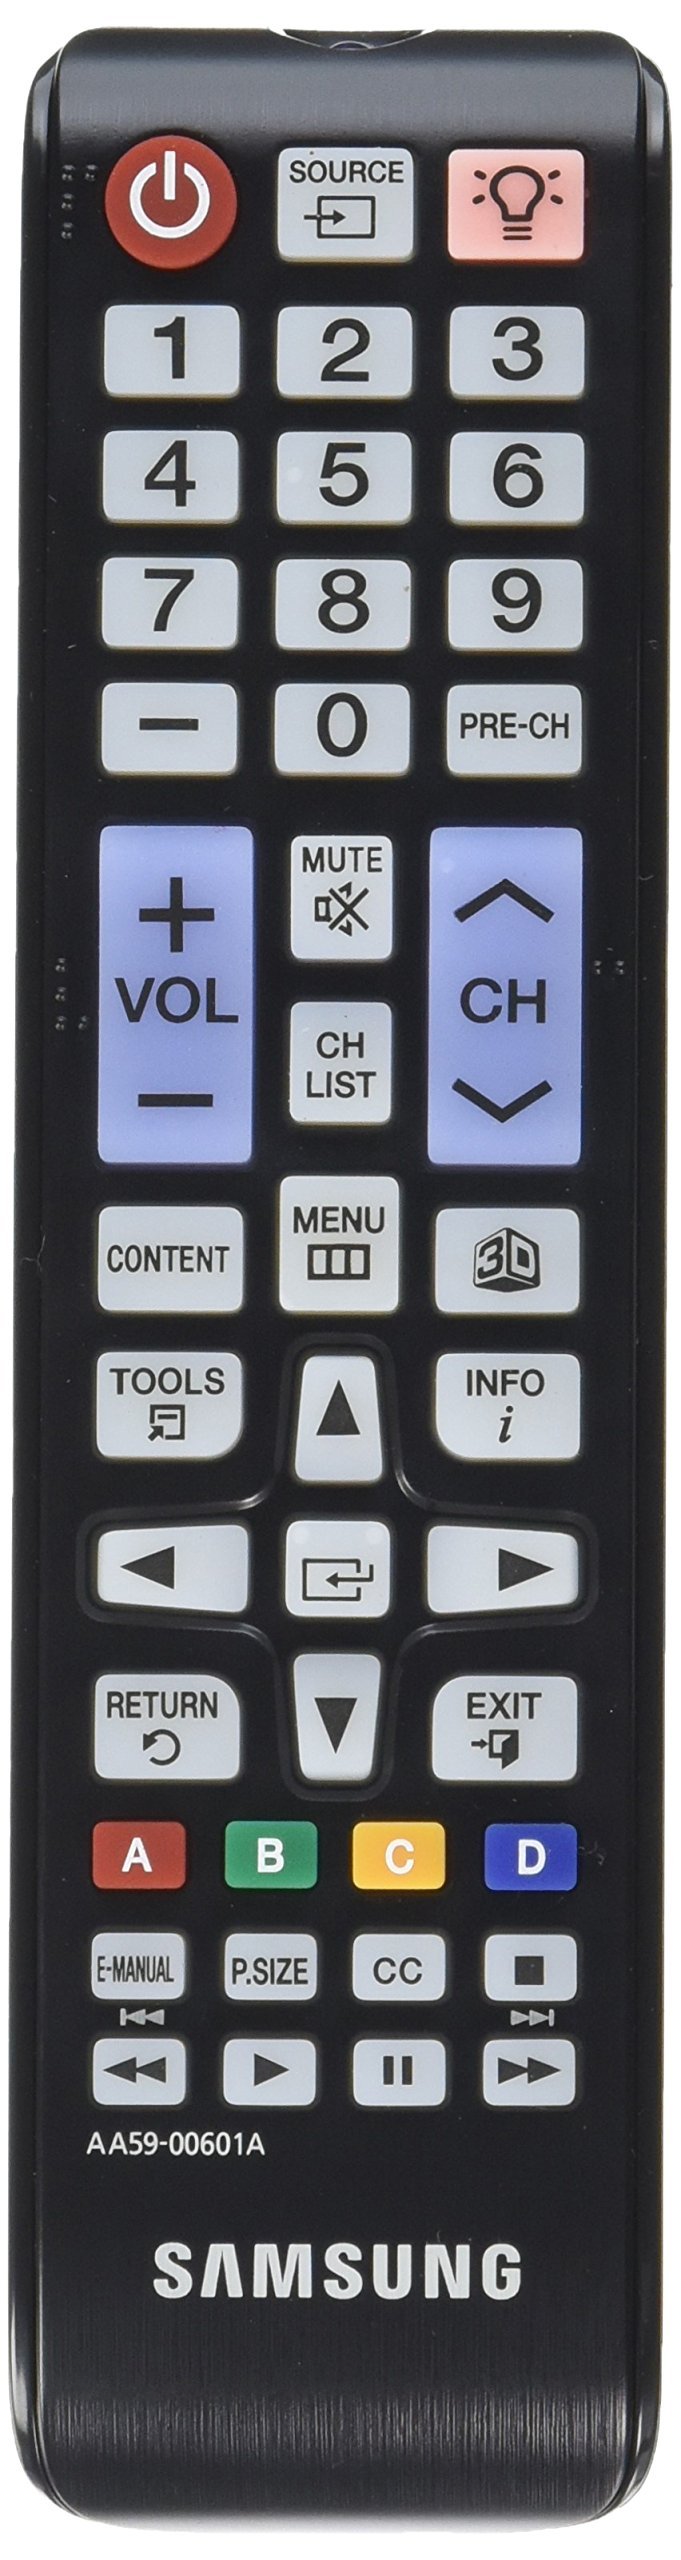 Samsung AA59-00601A Remote Control